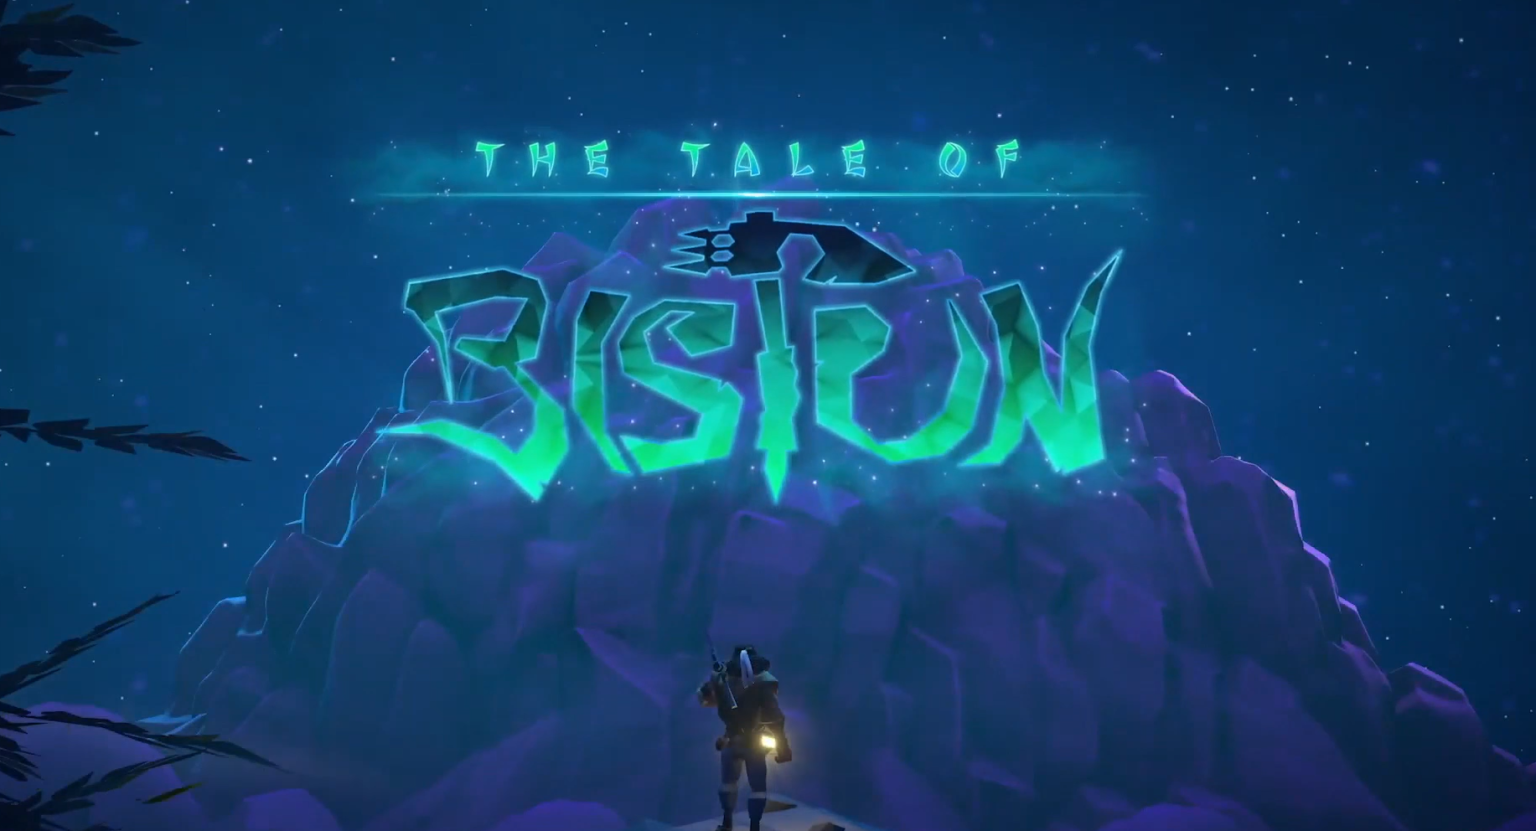 The Tale of Bistun Free Download - GameTrex